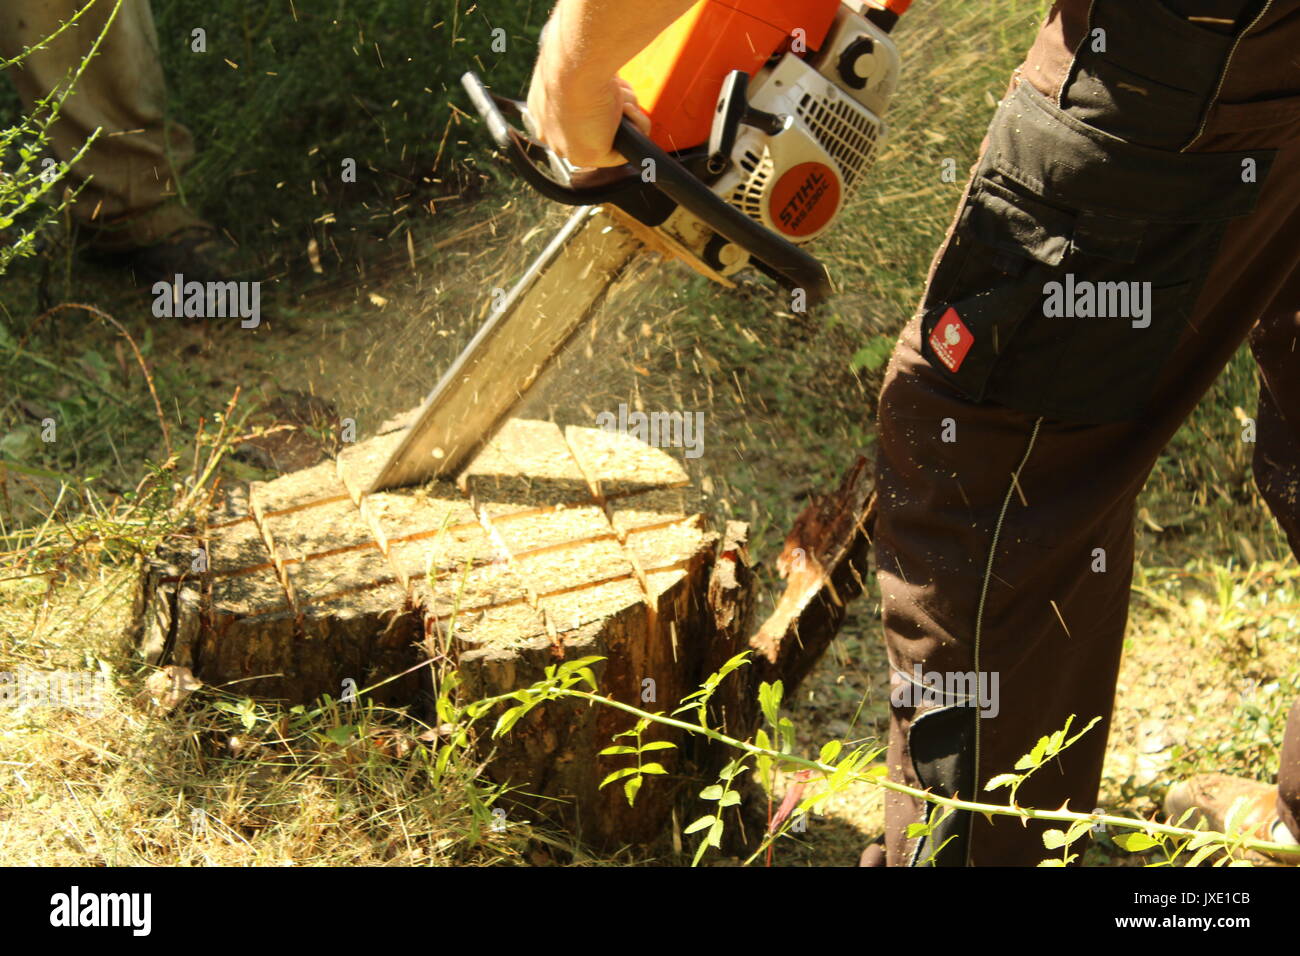 Stihl chainsaw Stock Photo